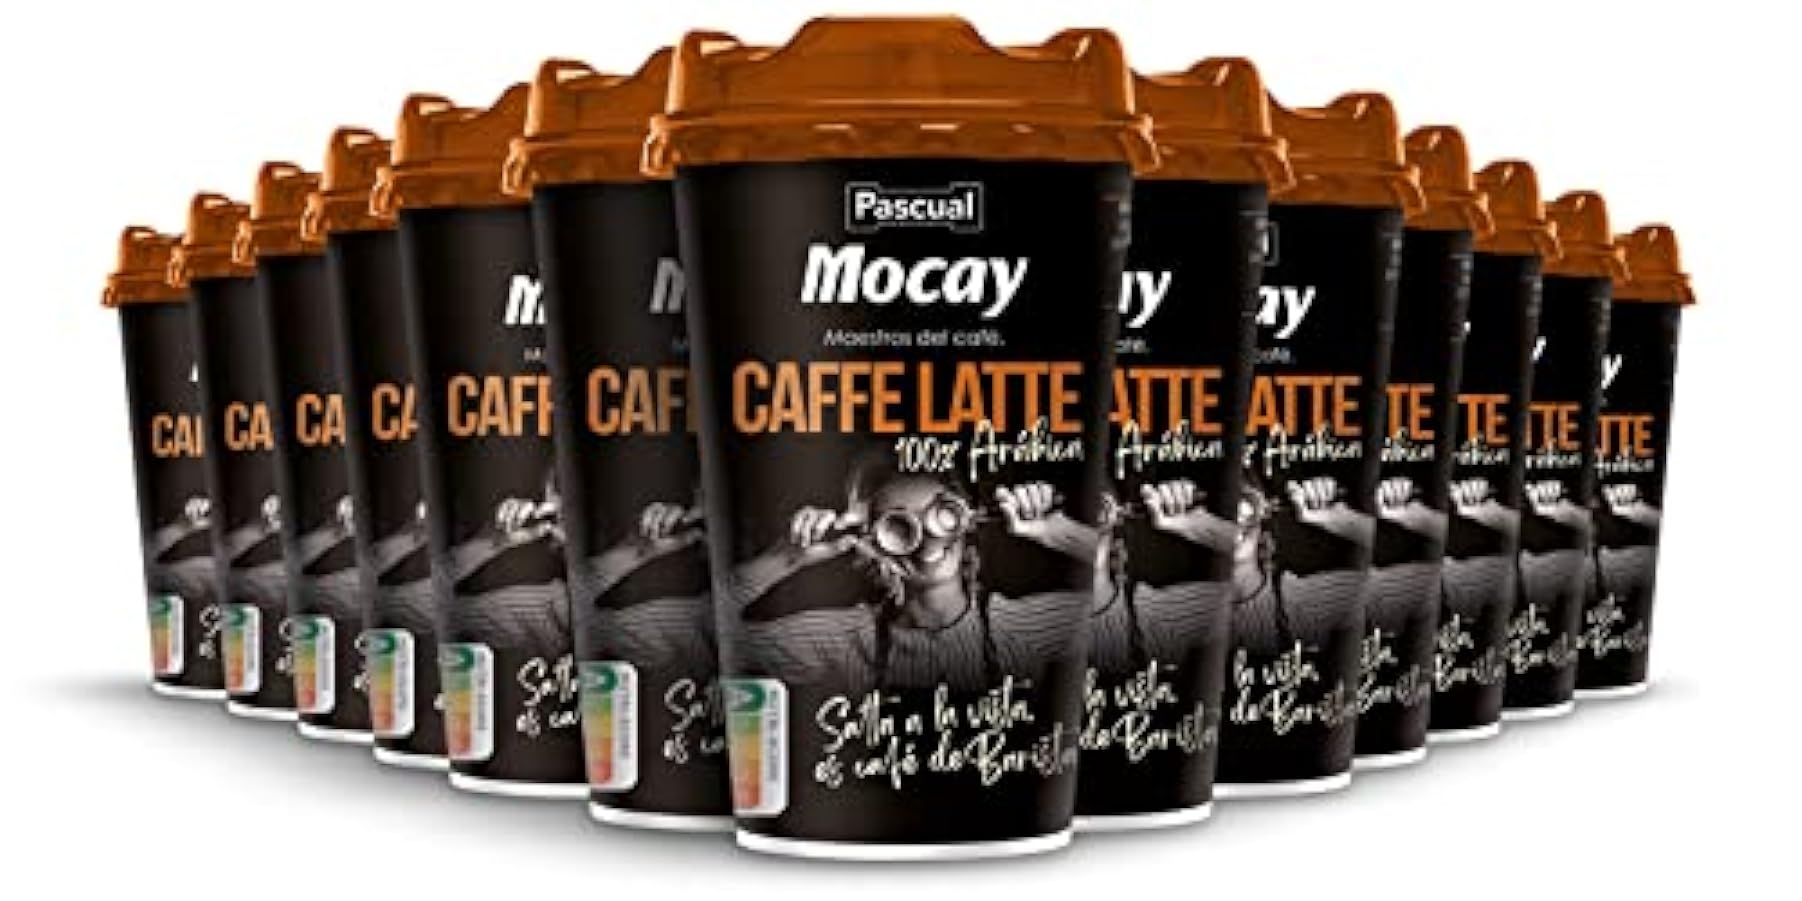 Mocay - Confezione di bicchieri da caffè latte pronto per bere, 20 bicchieri x 200 ml 238612010